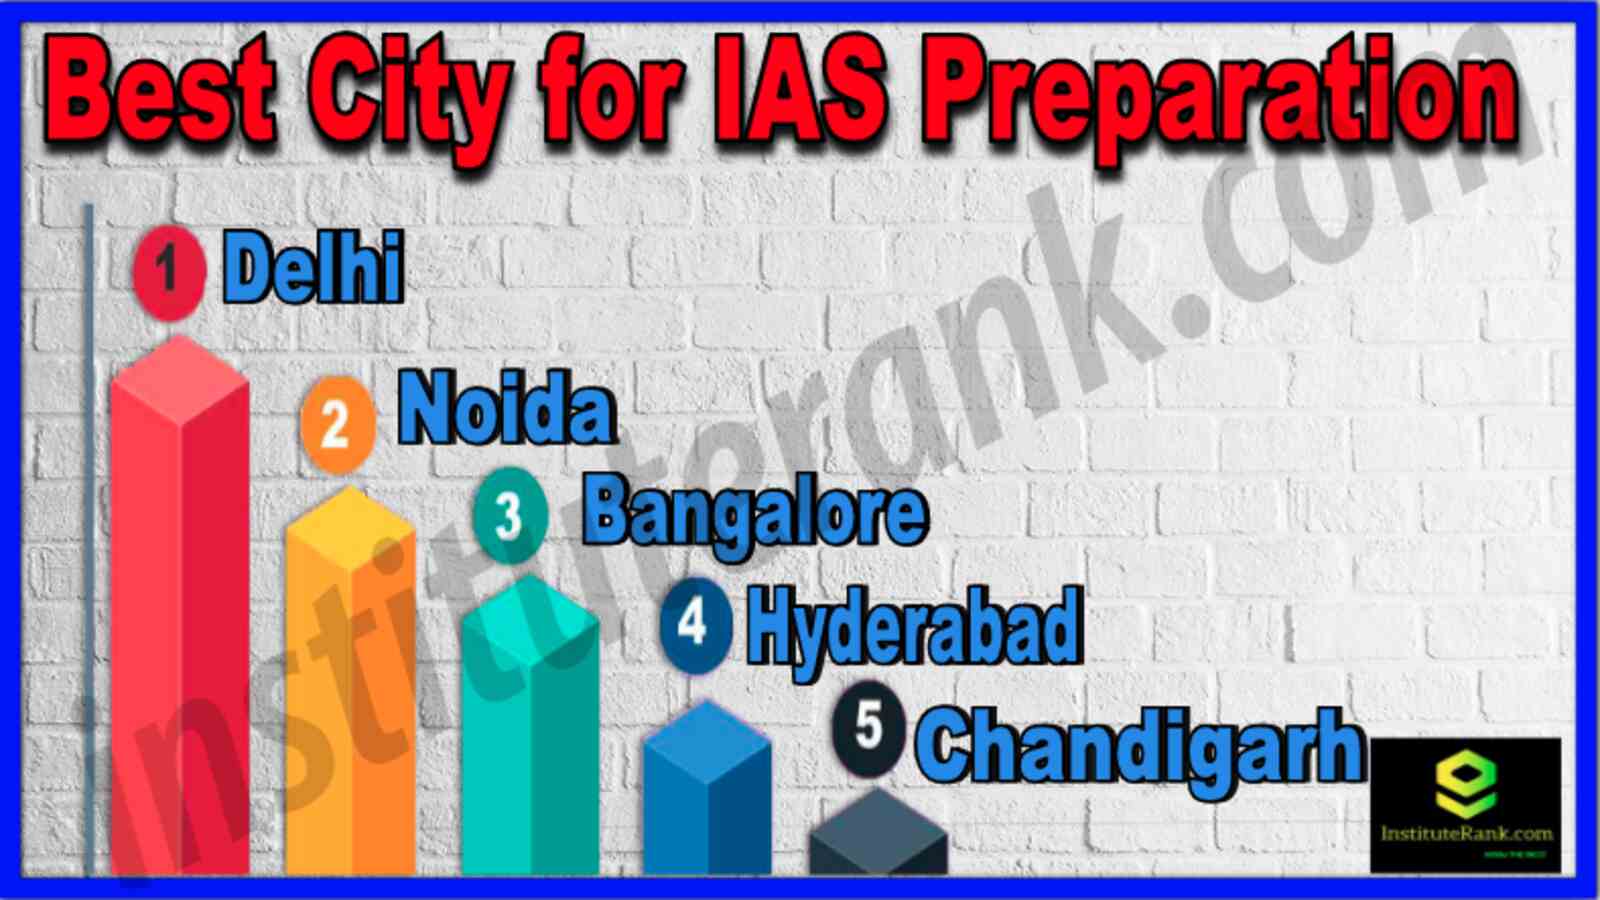 Best City for IAS Preparation